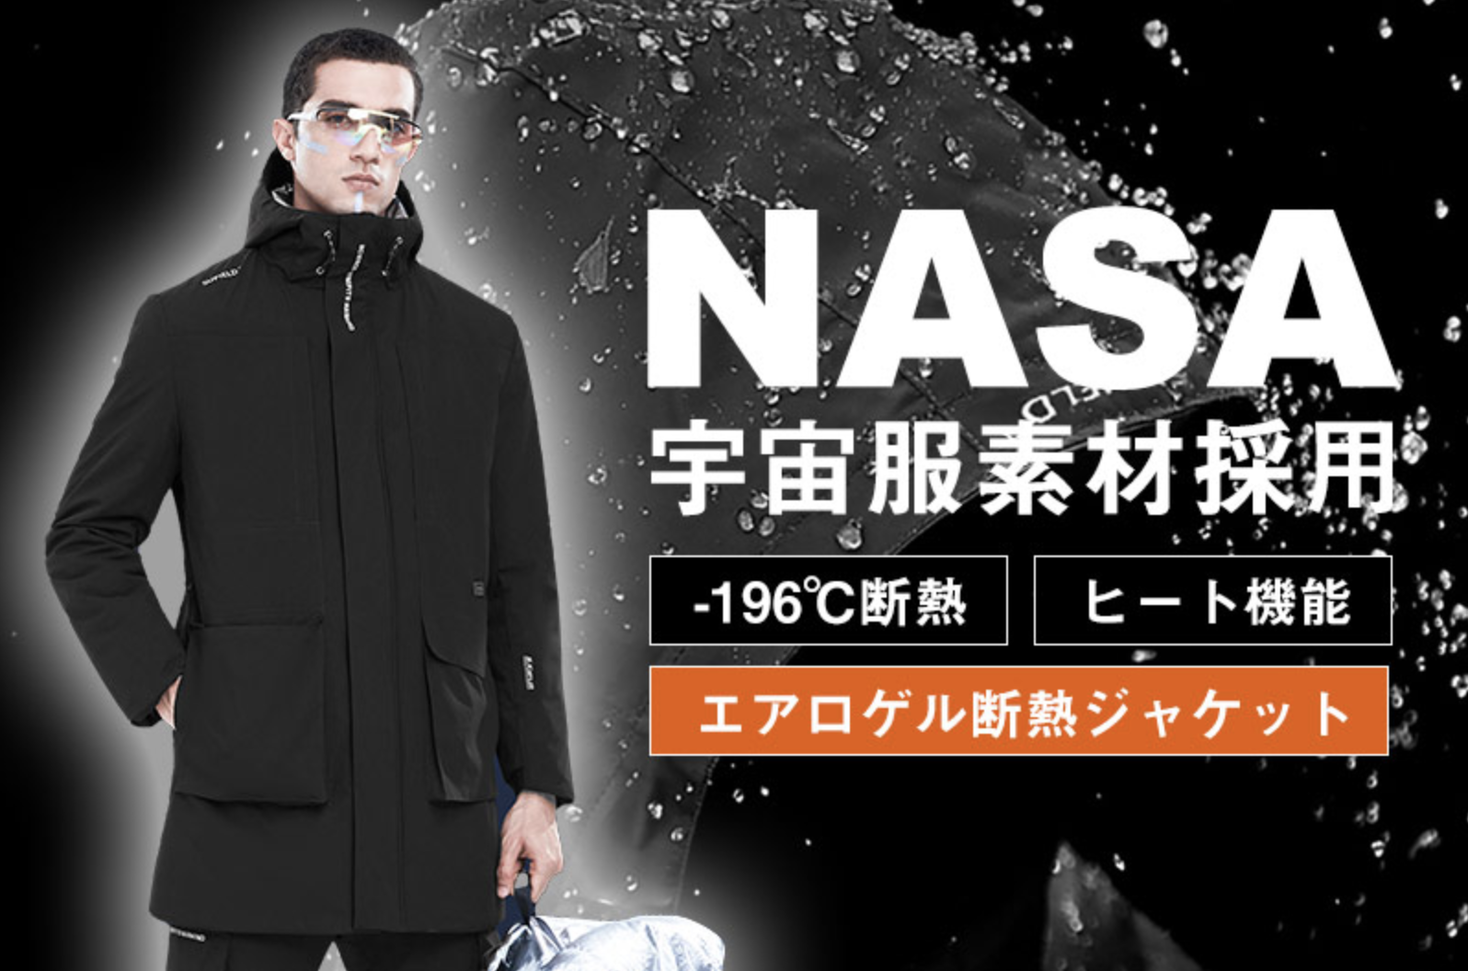 NASA宇宙服の素材をジャケットに応用、2ミリの素材で-196℃を断熱！超高